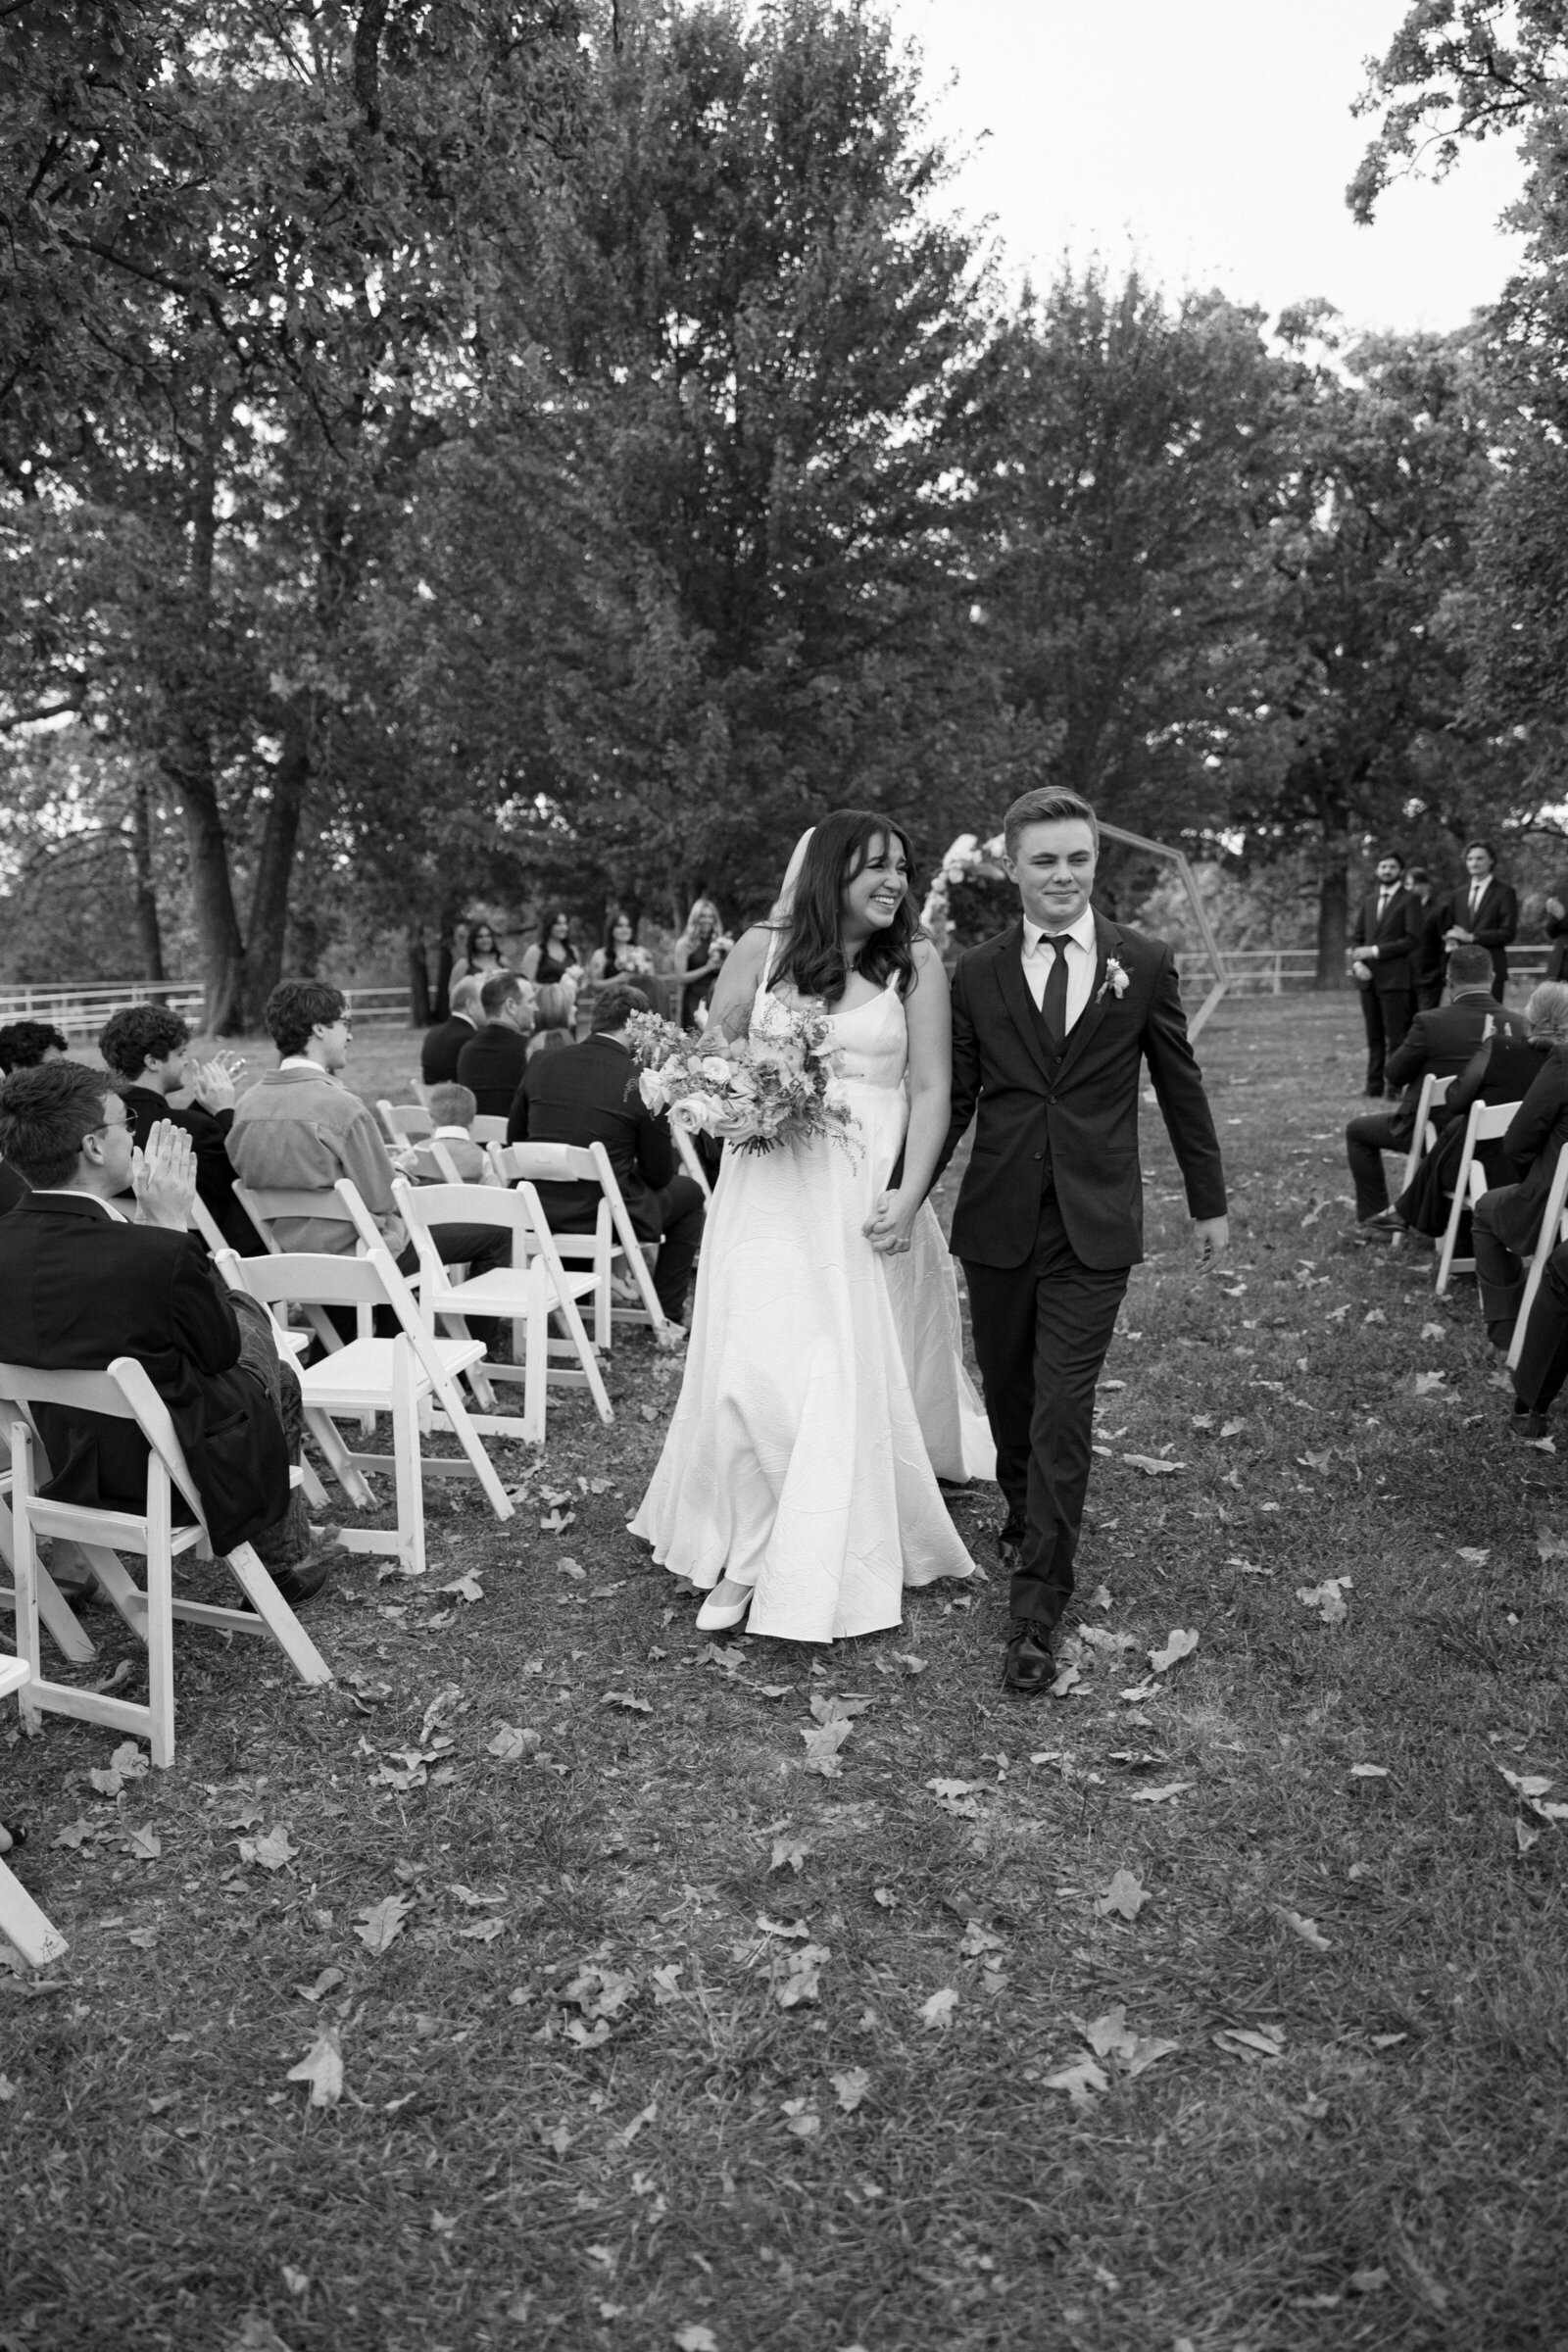 Olivia-Caed-Airbnb-Arkansas-Backyard-Wedding-Kyra-Noel-Photography-5577